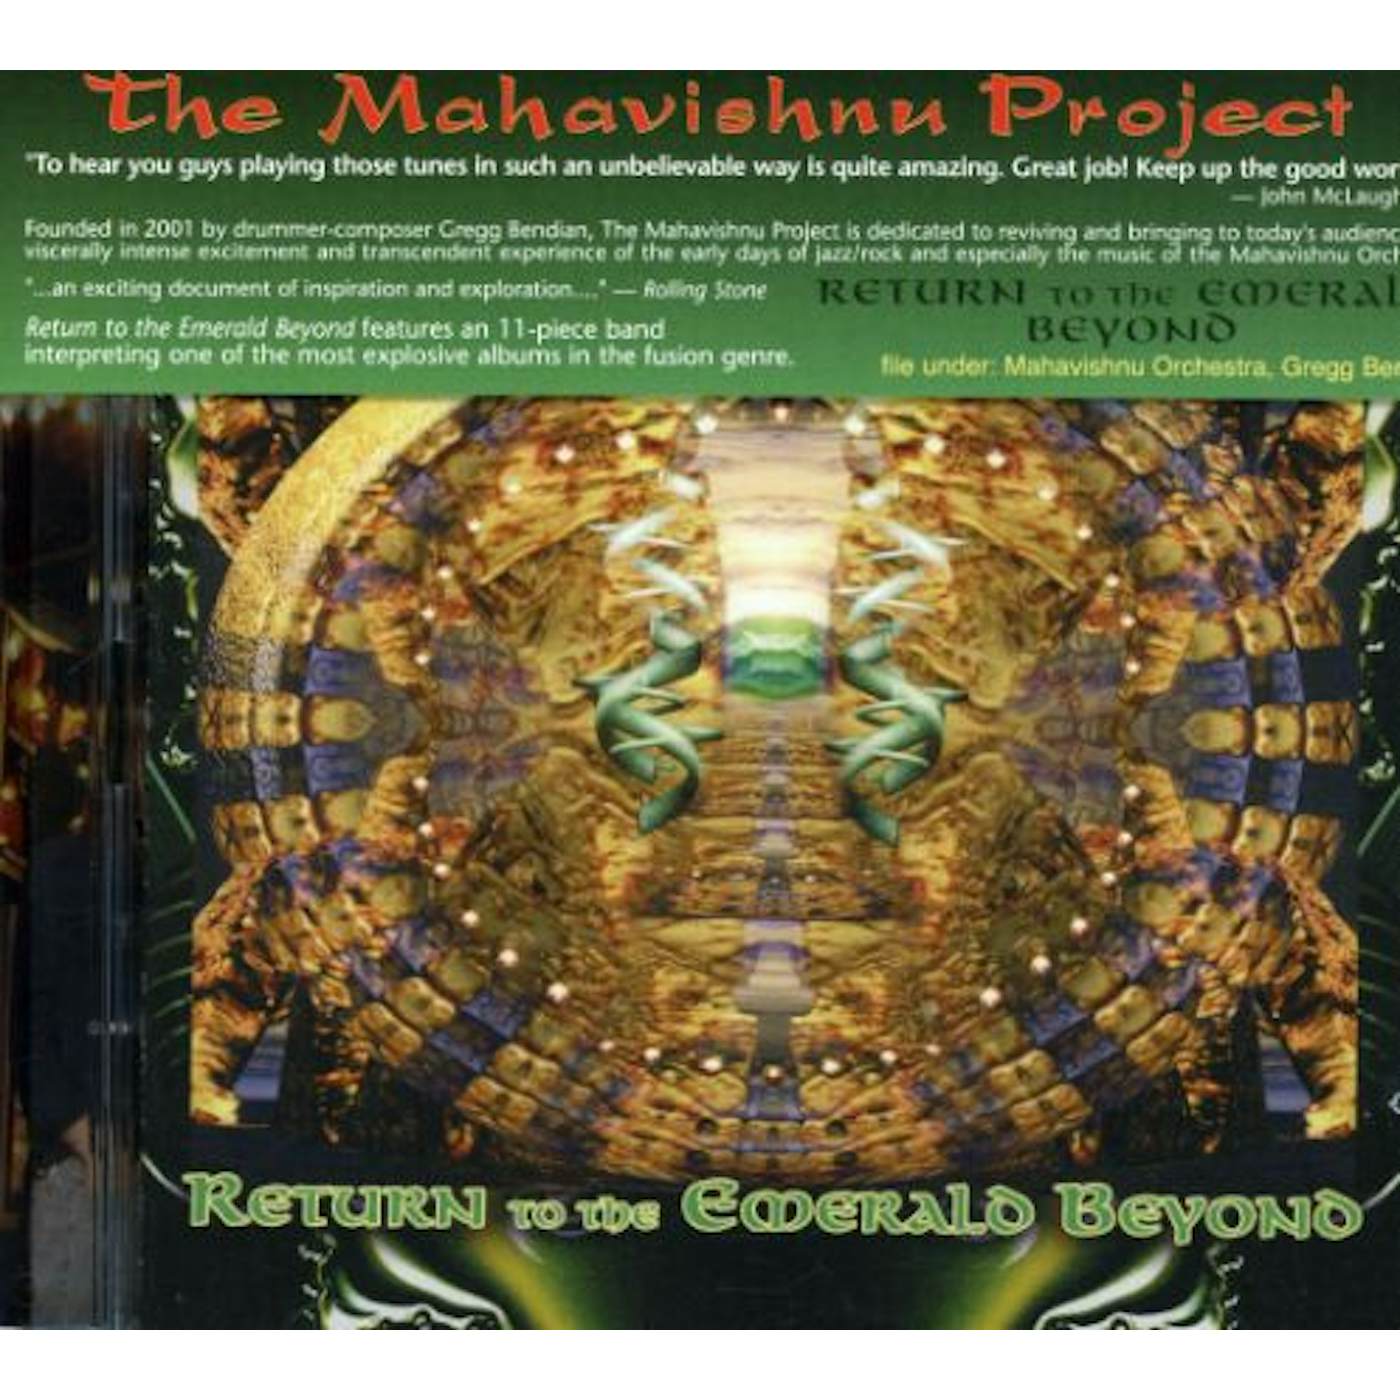 Mahavishnu Project RETURN TO THE EMERALD BEYOND CD